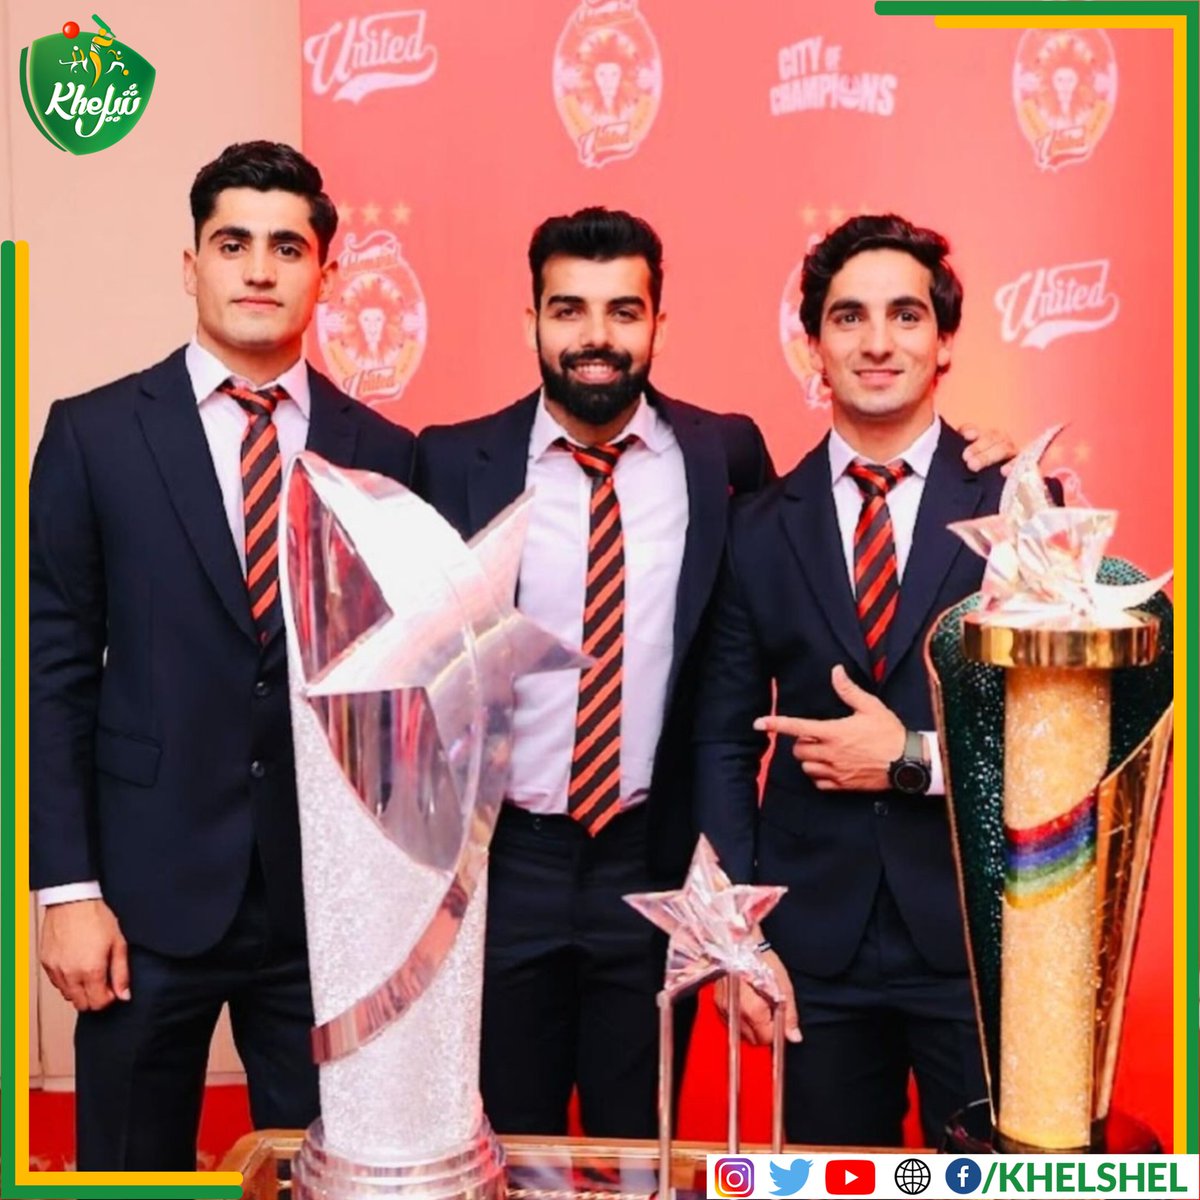 Islamabad United captain Shadab Khan, pacers Hunain Shah and Ubaid Shah posed with the three trophies of #PSL

#Cricket | #Pakistan | #ShadabKhan | #HunainShah |#UbaidShah | #IslamabadUnited | #UnitedWeWin